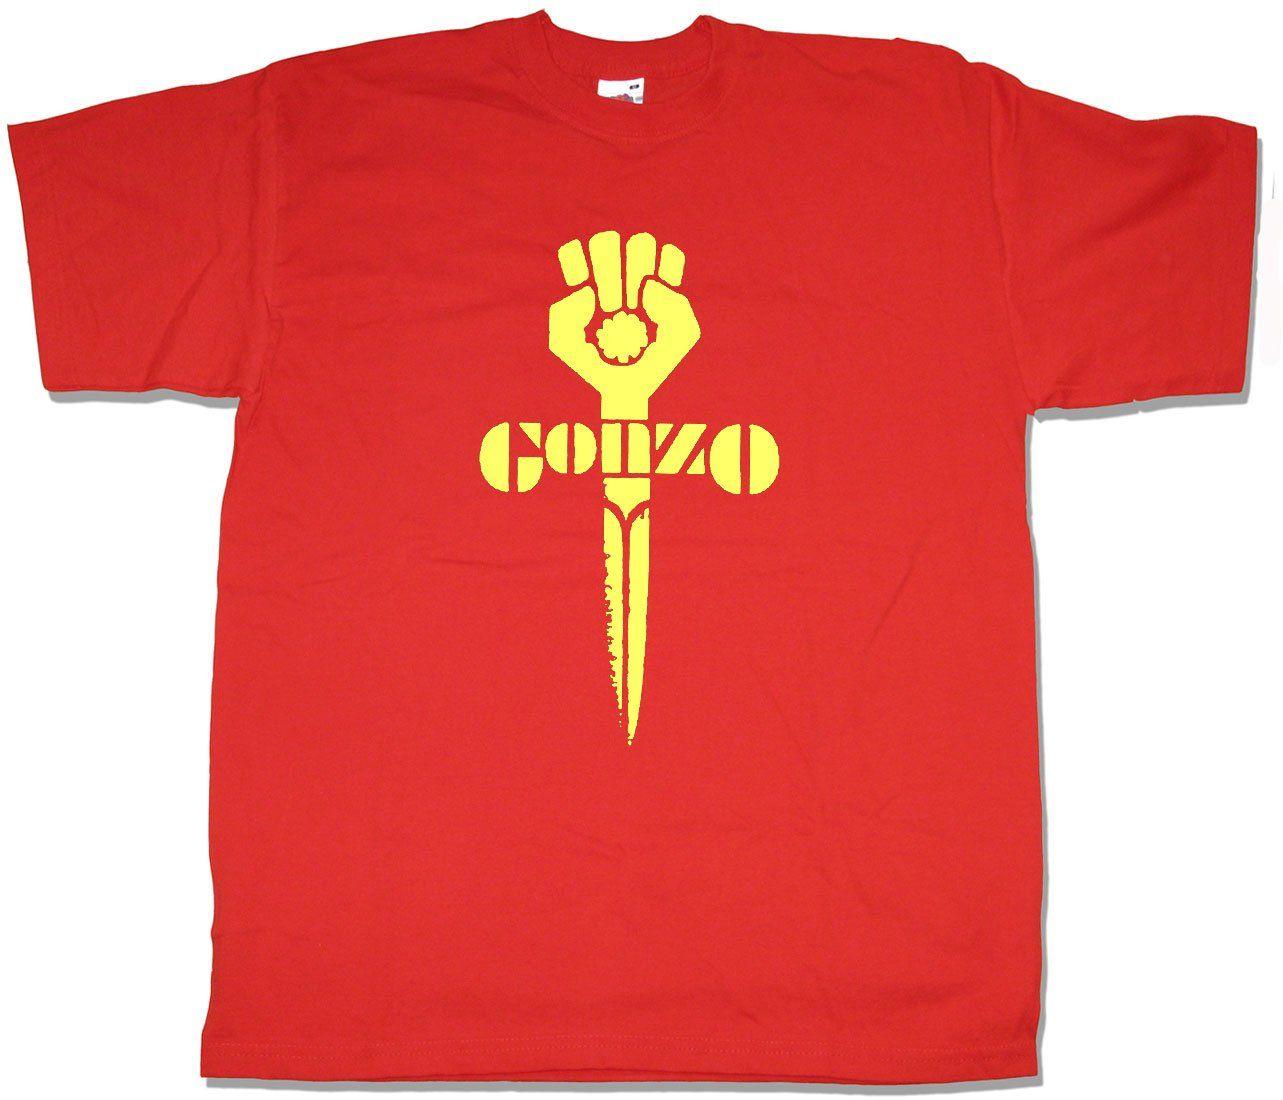 Gonzo Logo - Gonzo Logo T shirt for Hunter S Thompson afficionados | Pop Culture ...